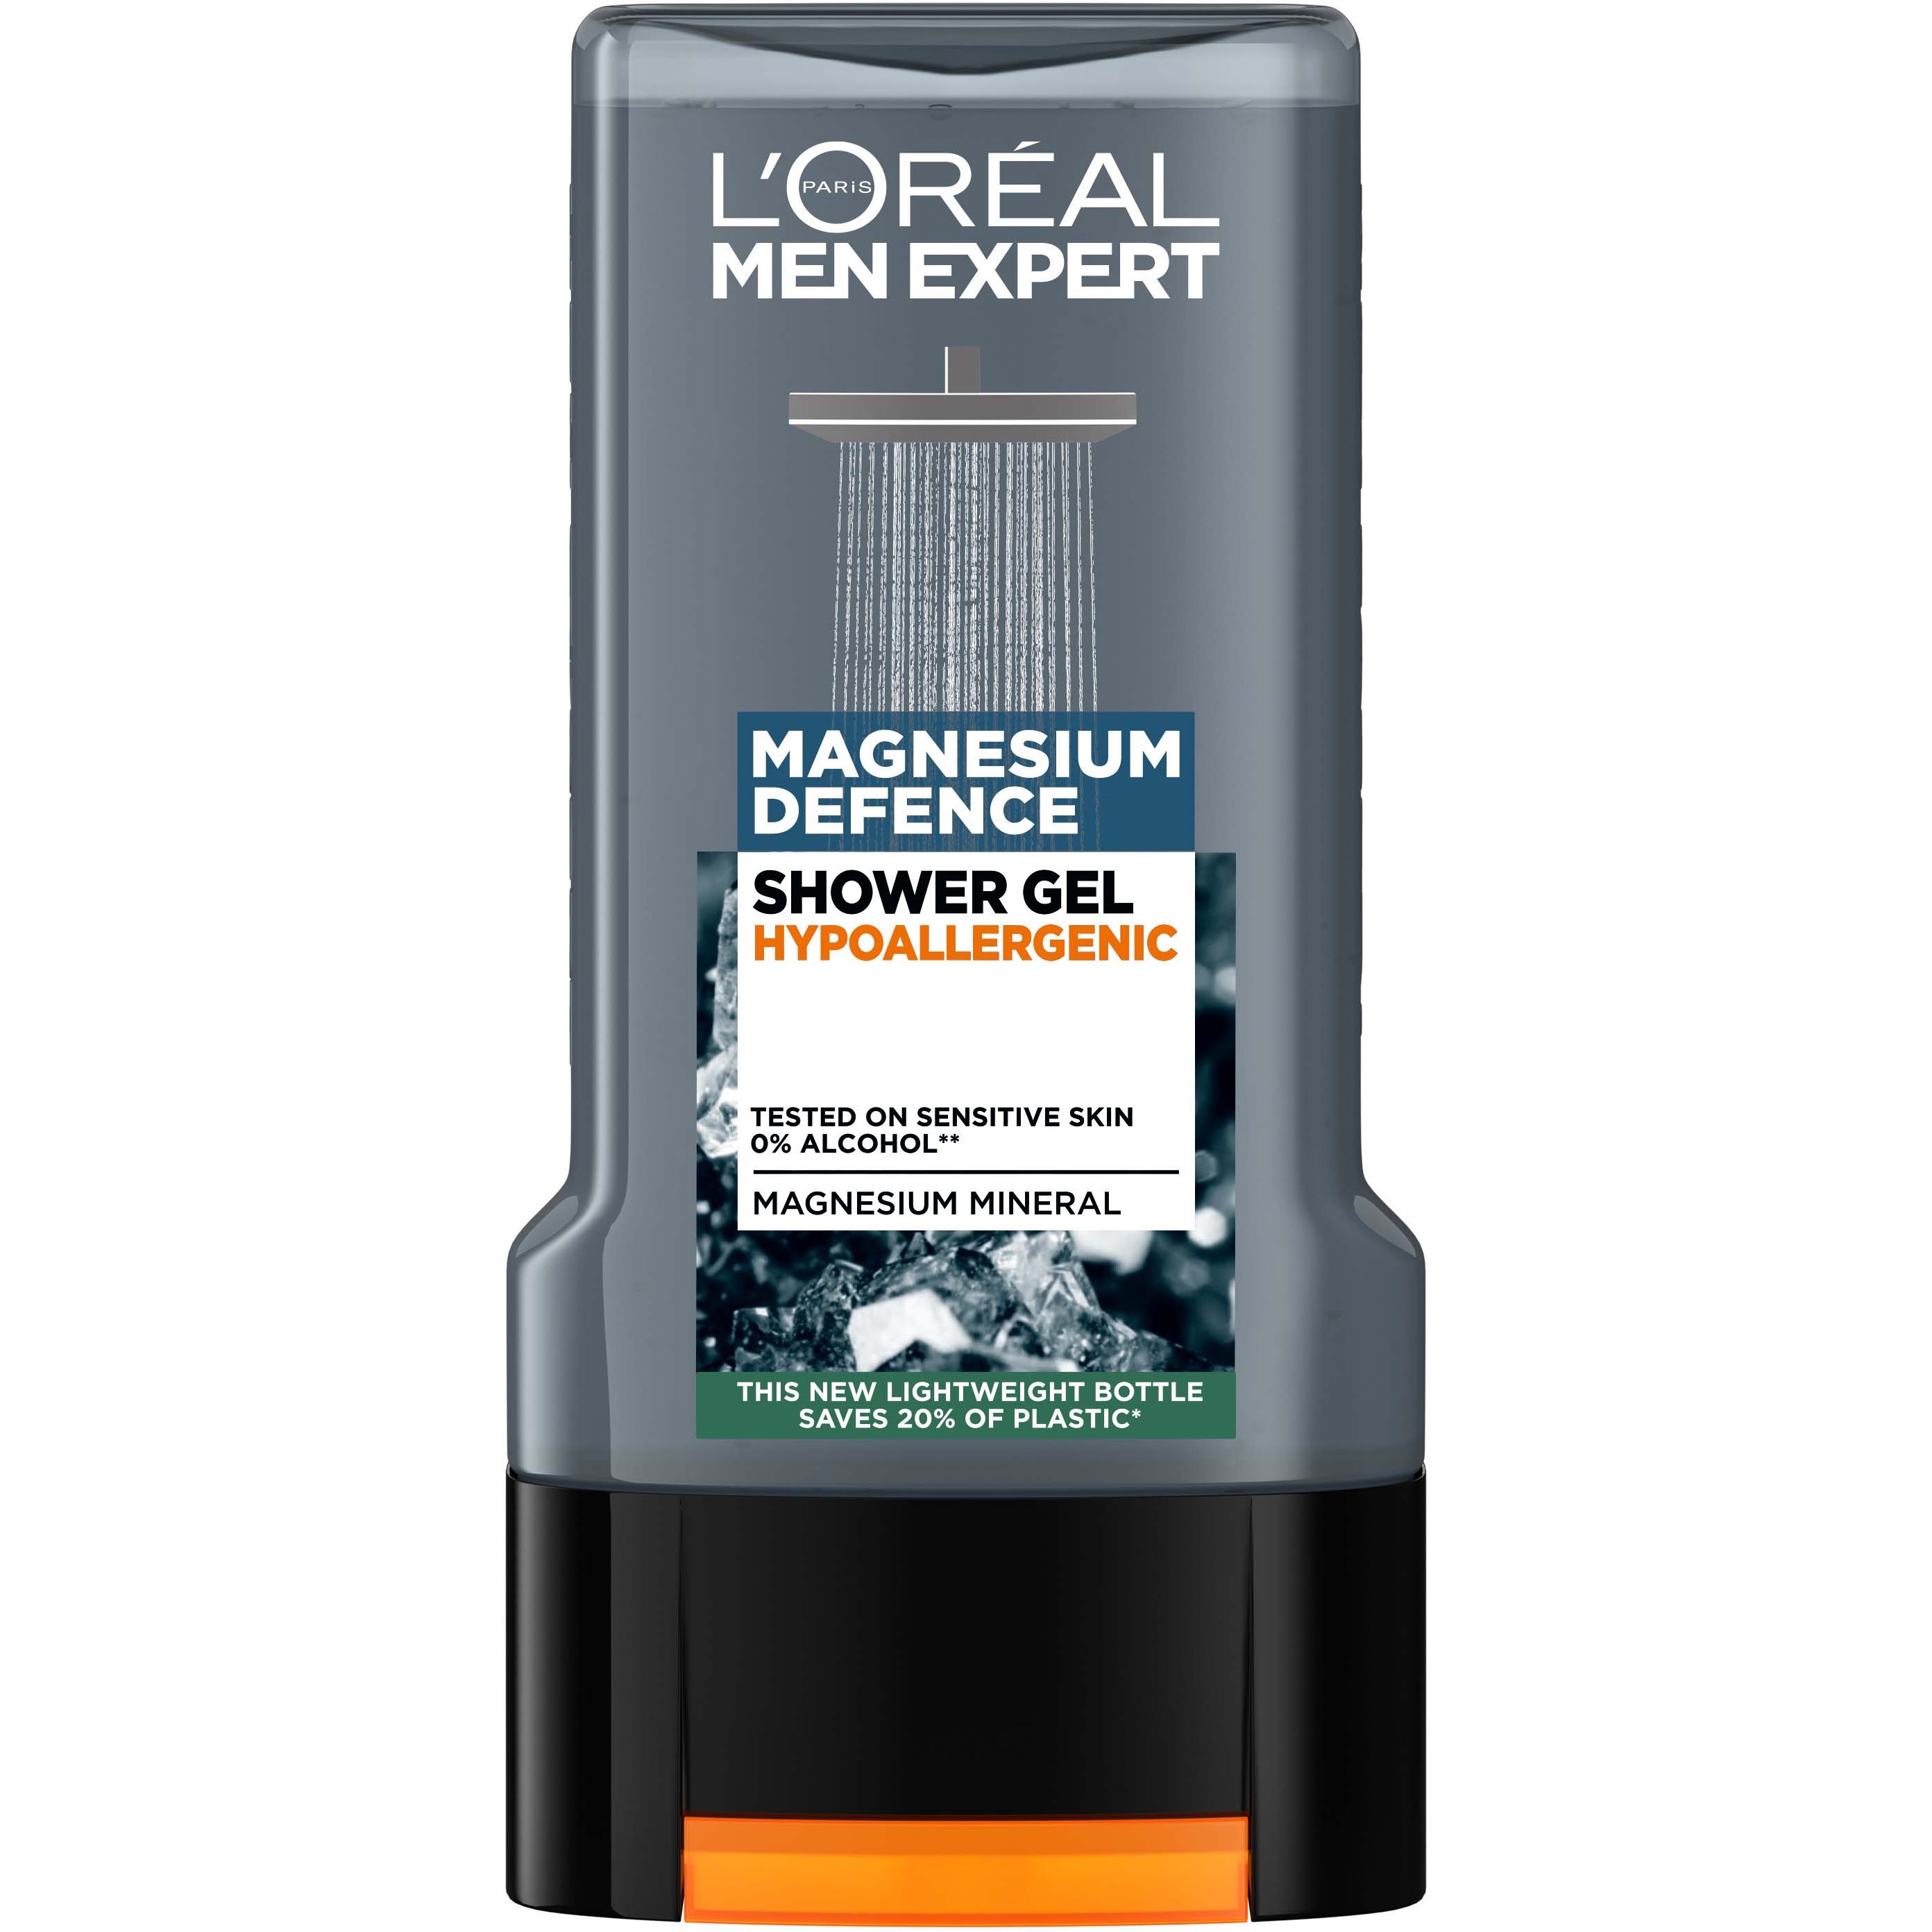 Bilde av Loreal Paris Men Expert Magnesium Defense Hypoallergenic Shower Gel